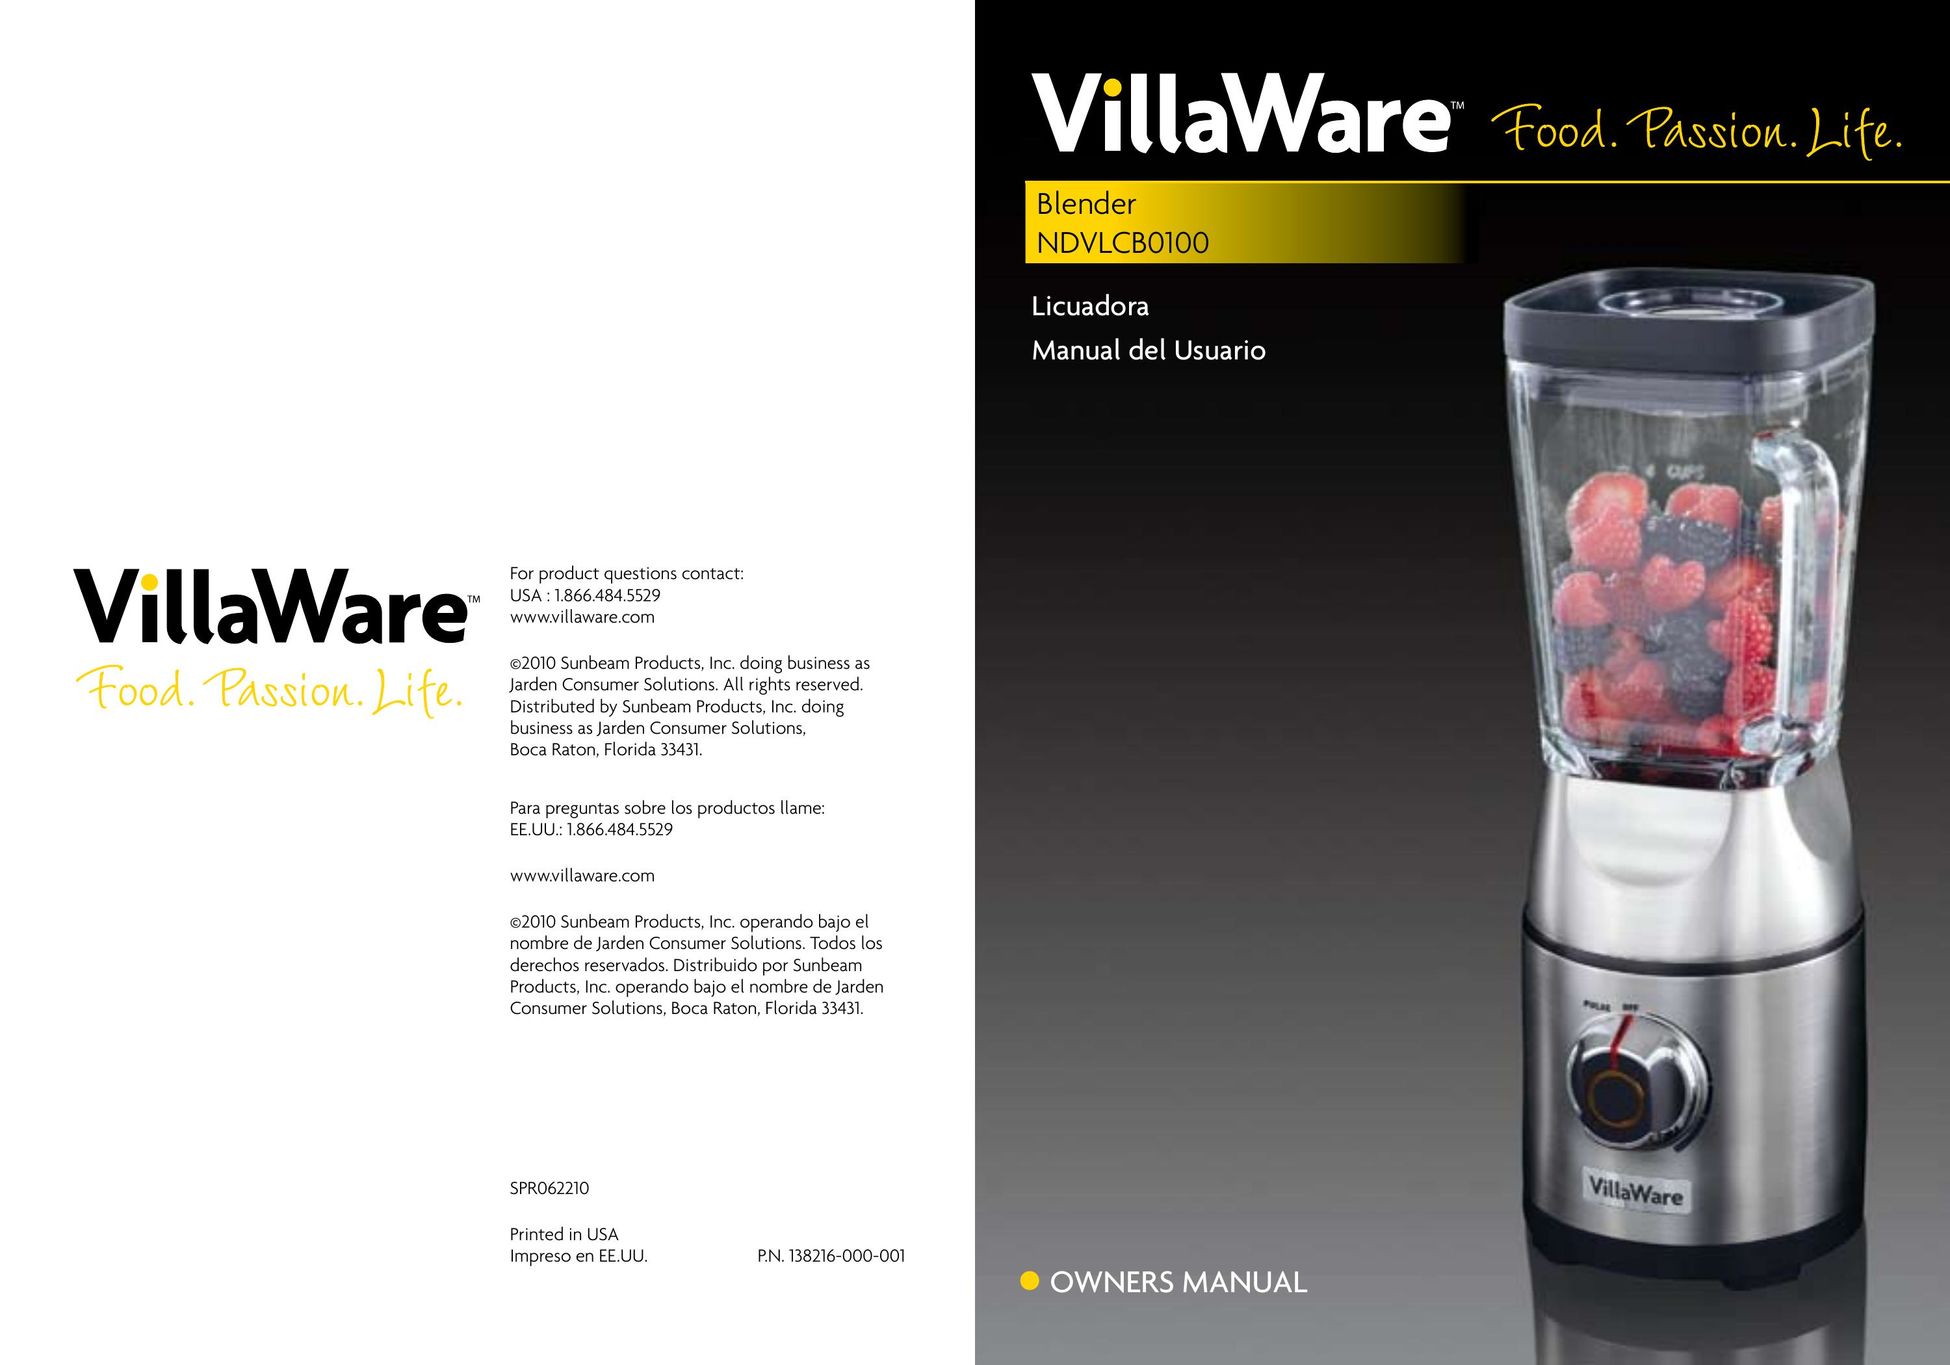 Villaware NDVLCB0100 Blender User Manual